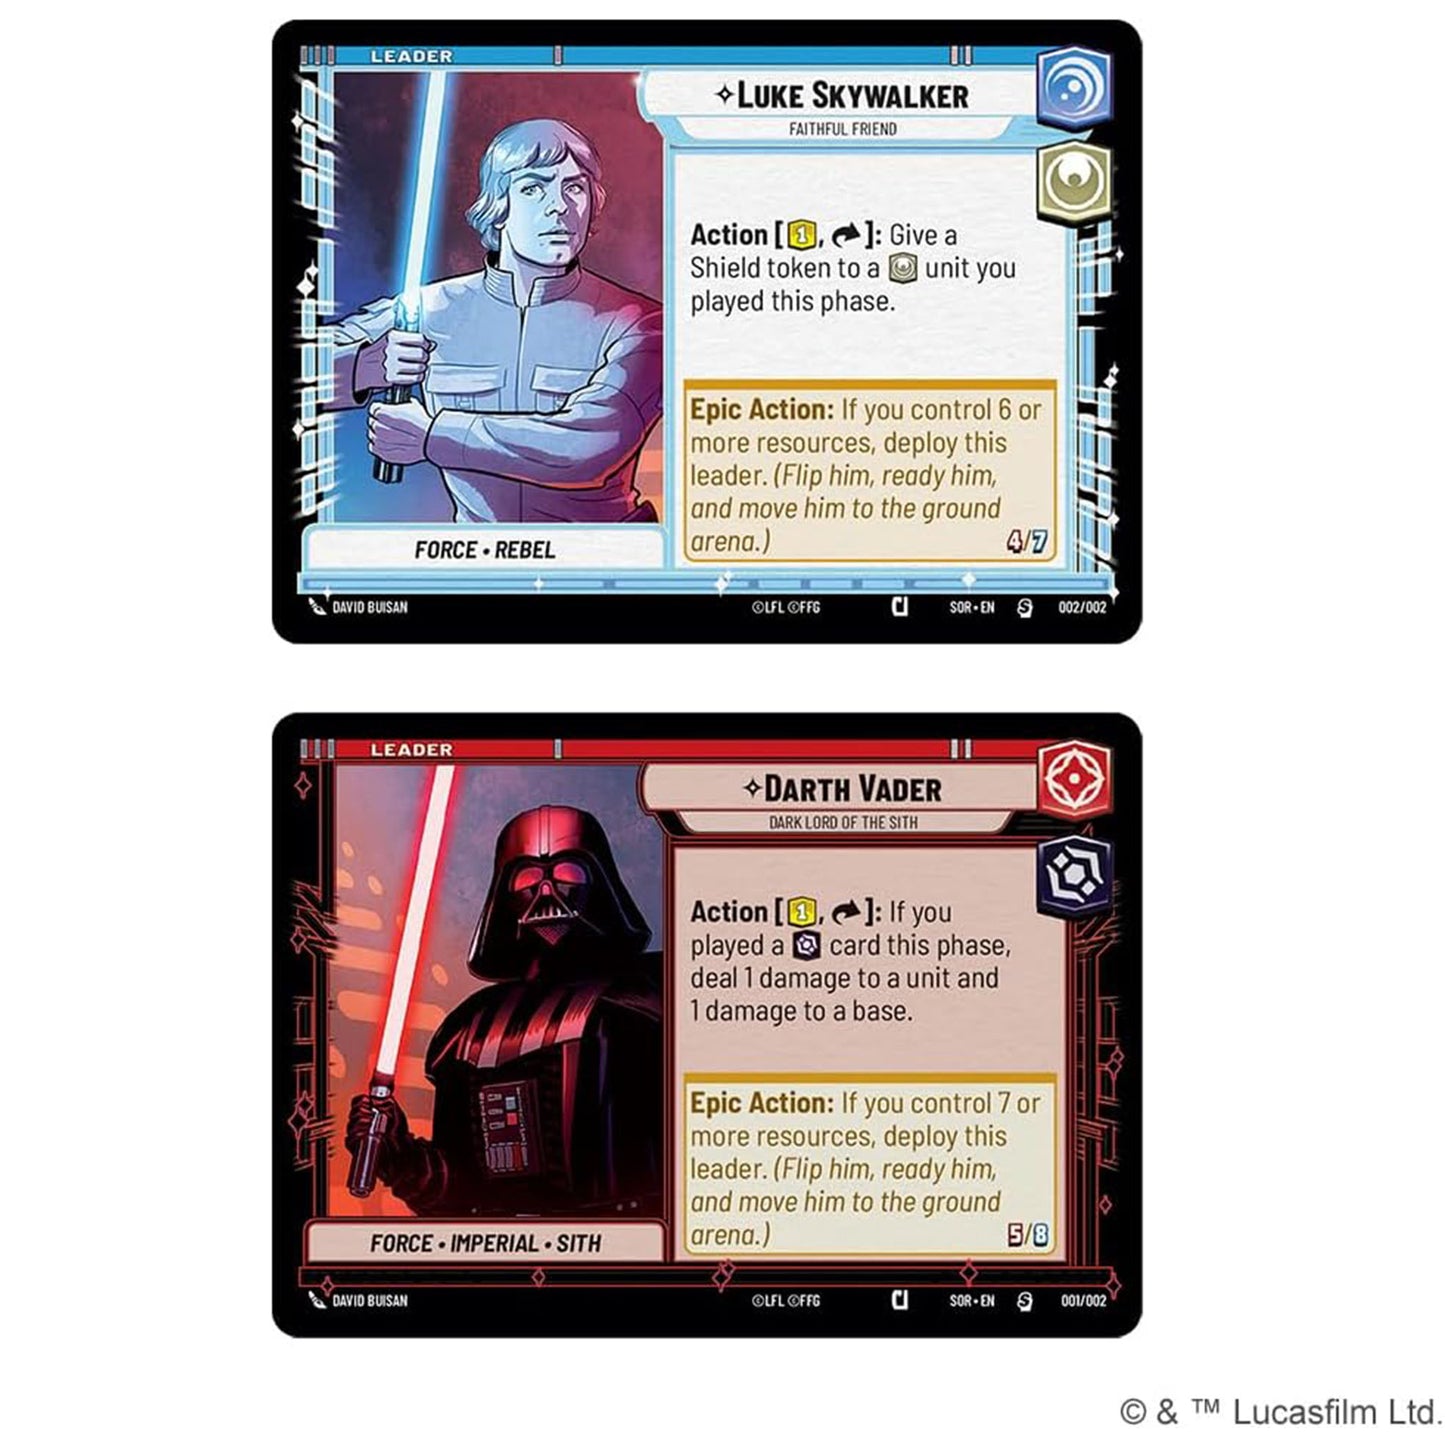 Star Wars : Unlimited Spark of Rebellion Prerelease Box